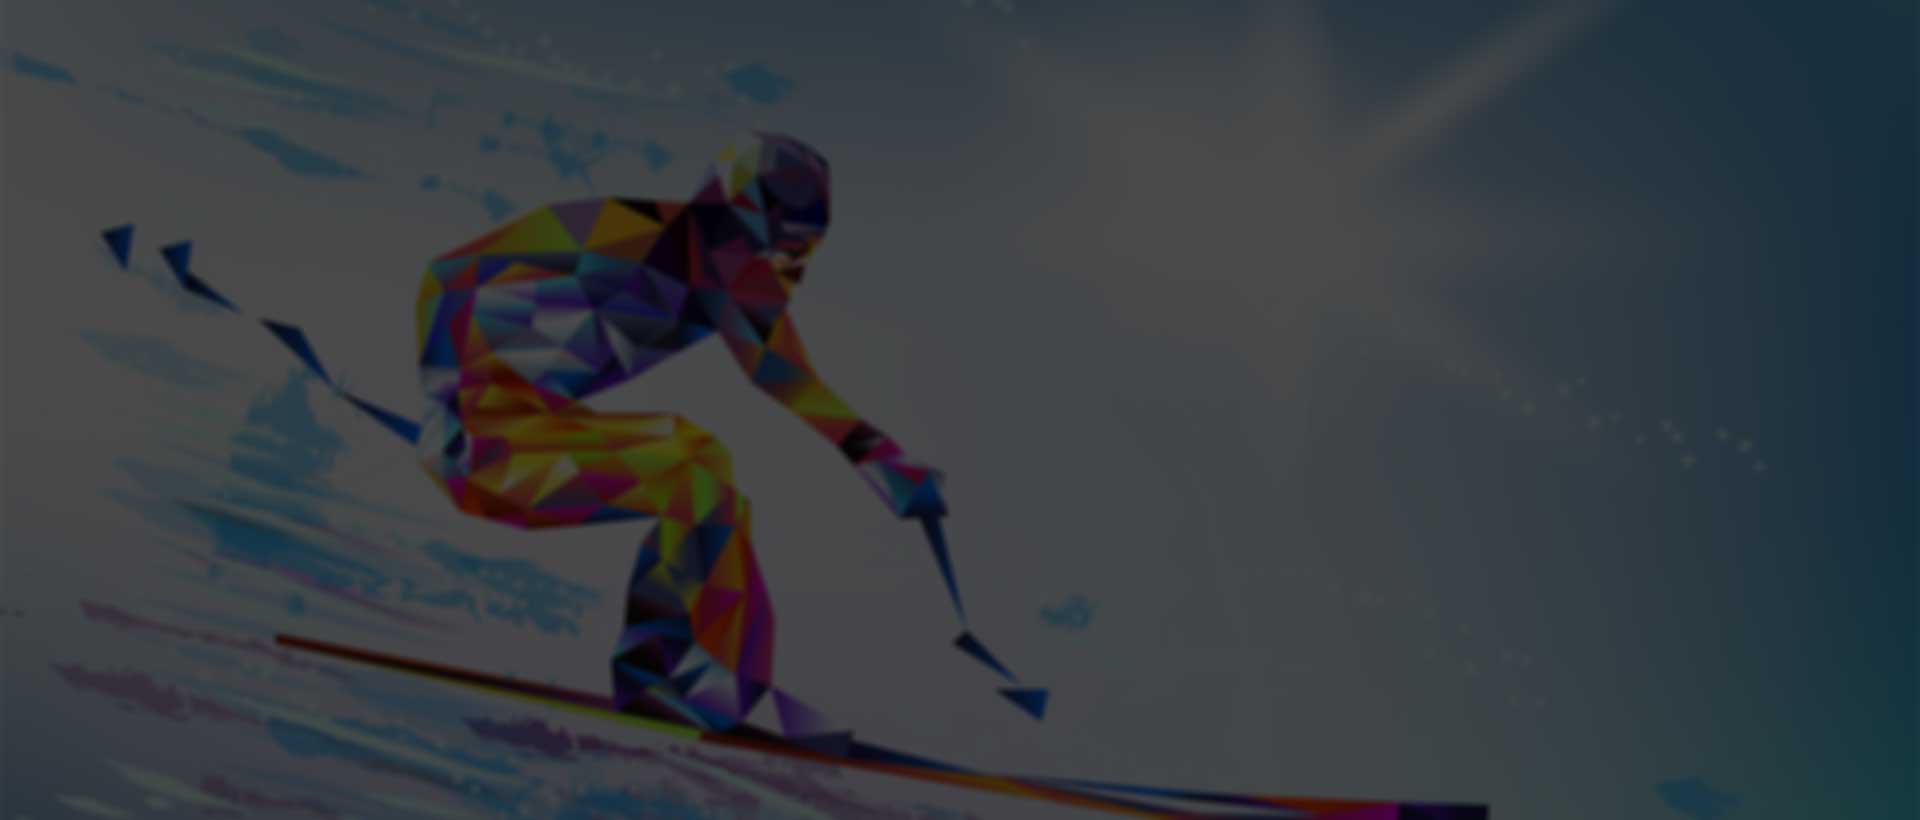 Illustration of Olympic Skier